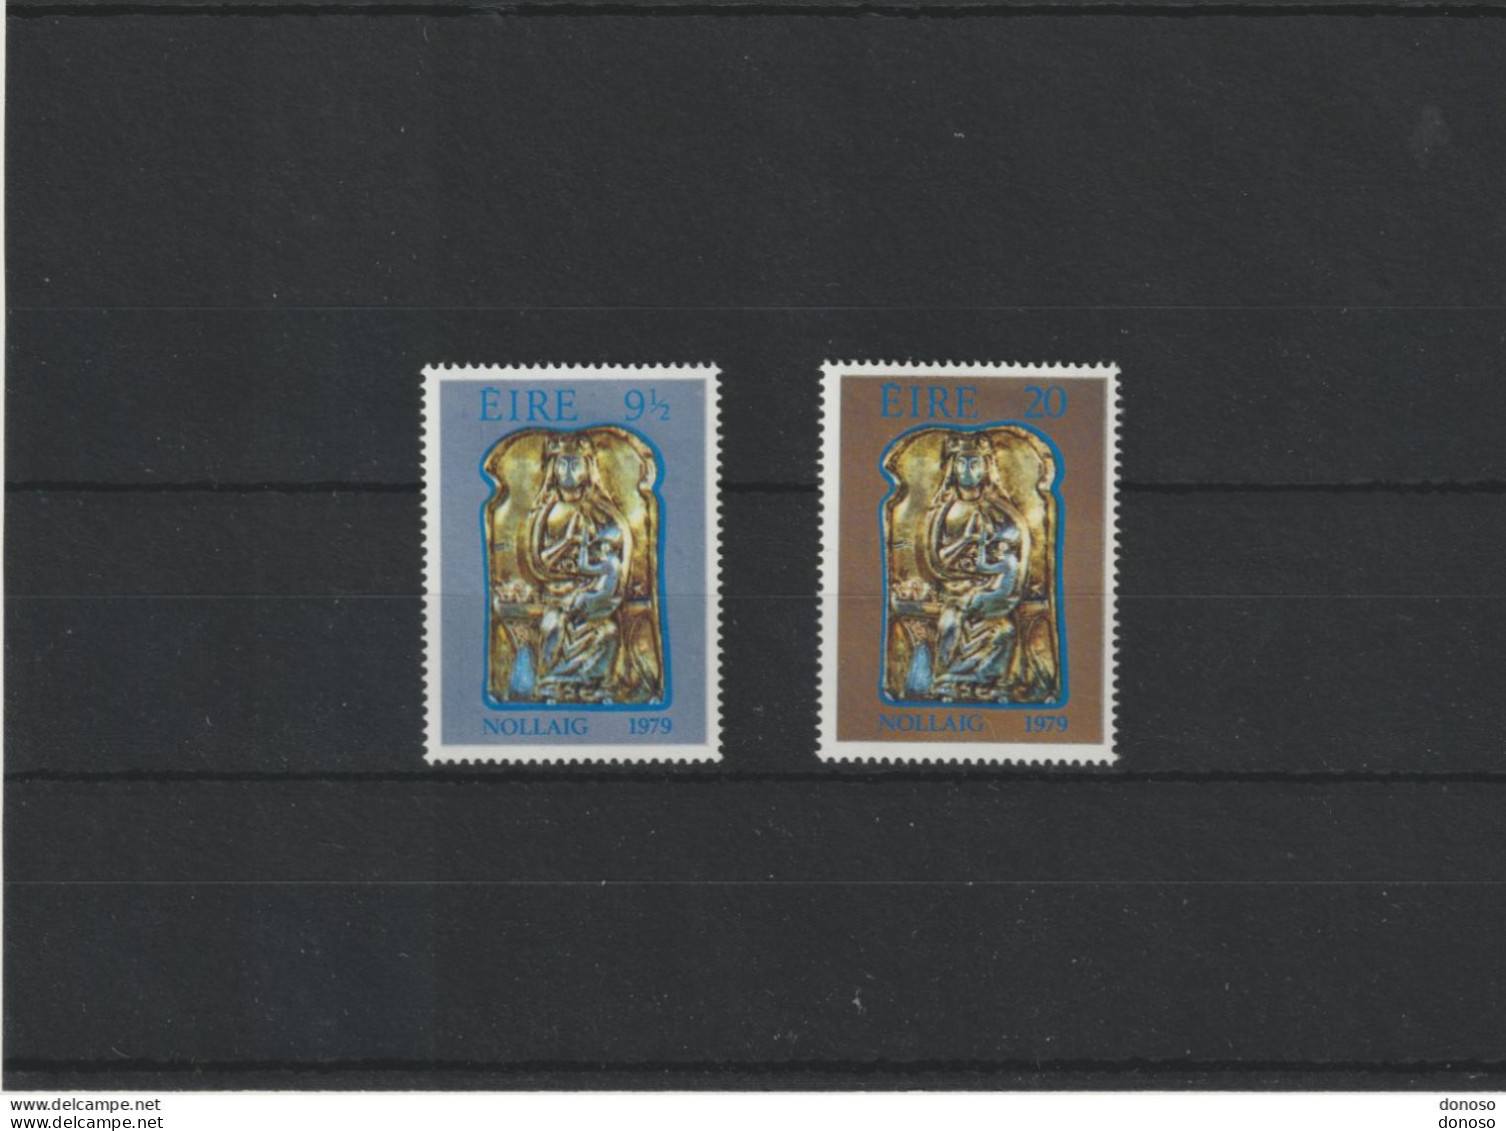 IRLANDE 1979 NOËL Yvert 412-413, Michel 410-411 NEUF** MNH - Unused Stamps